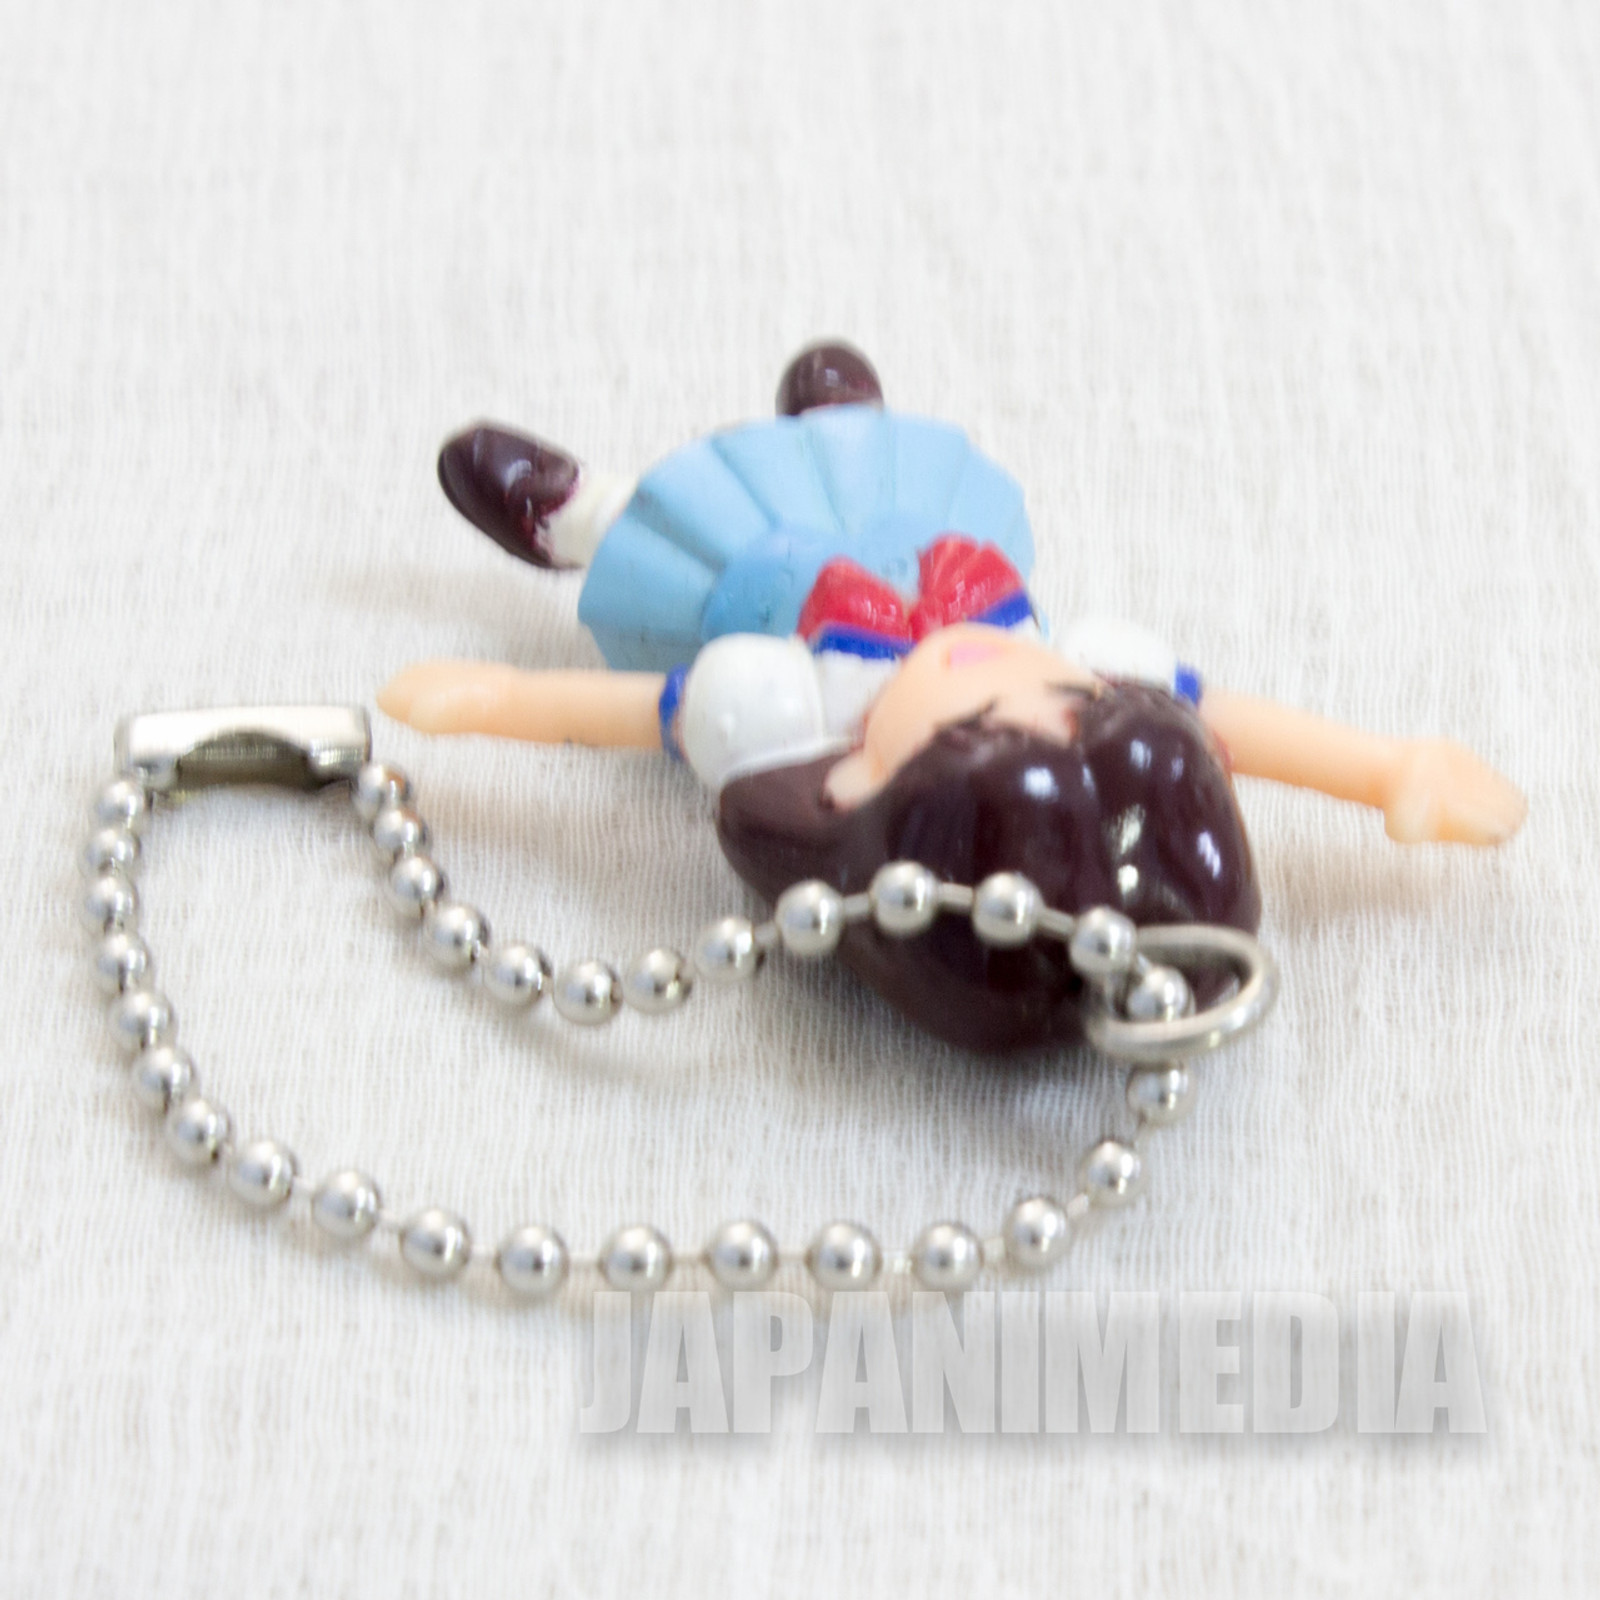 SLAM DUNK Haruko Akagi Mini Figure Ball Key Chain JAPAN ANIME MANGA